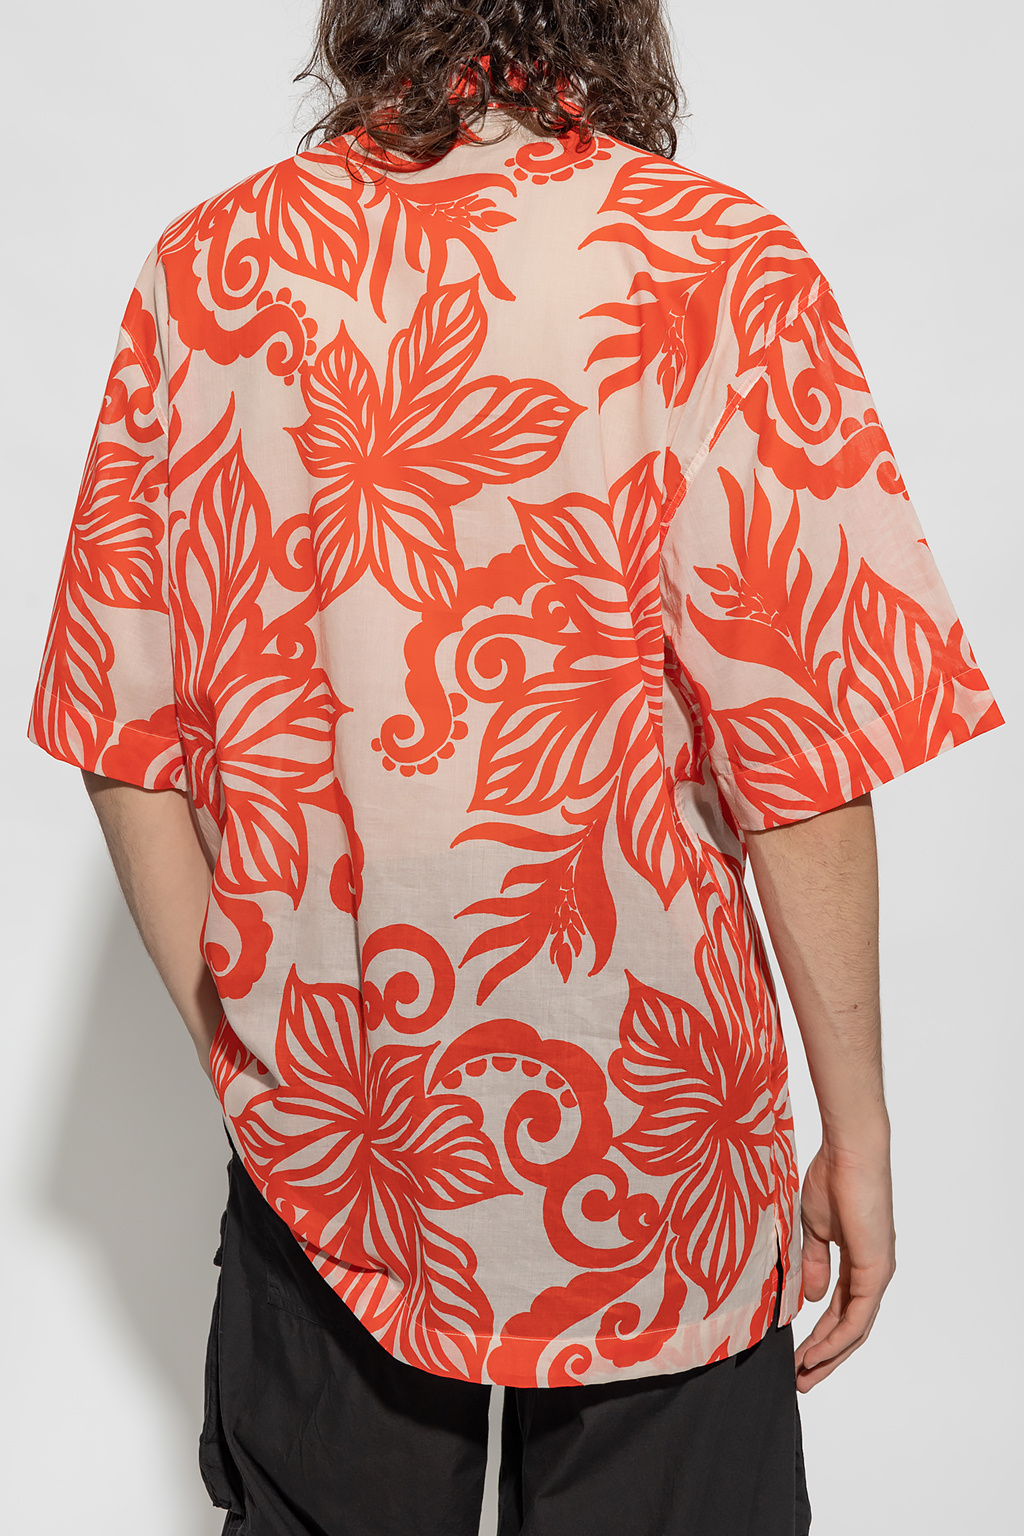 Dries Van Noten caps shirt with floral motif